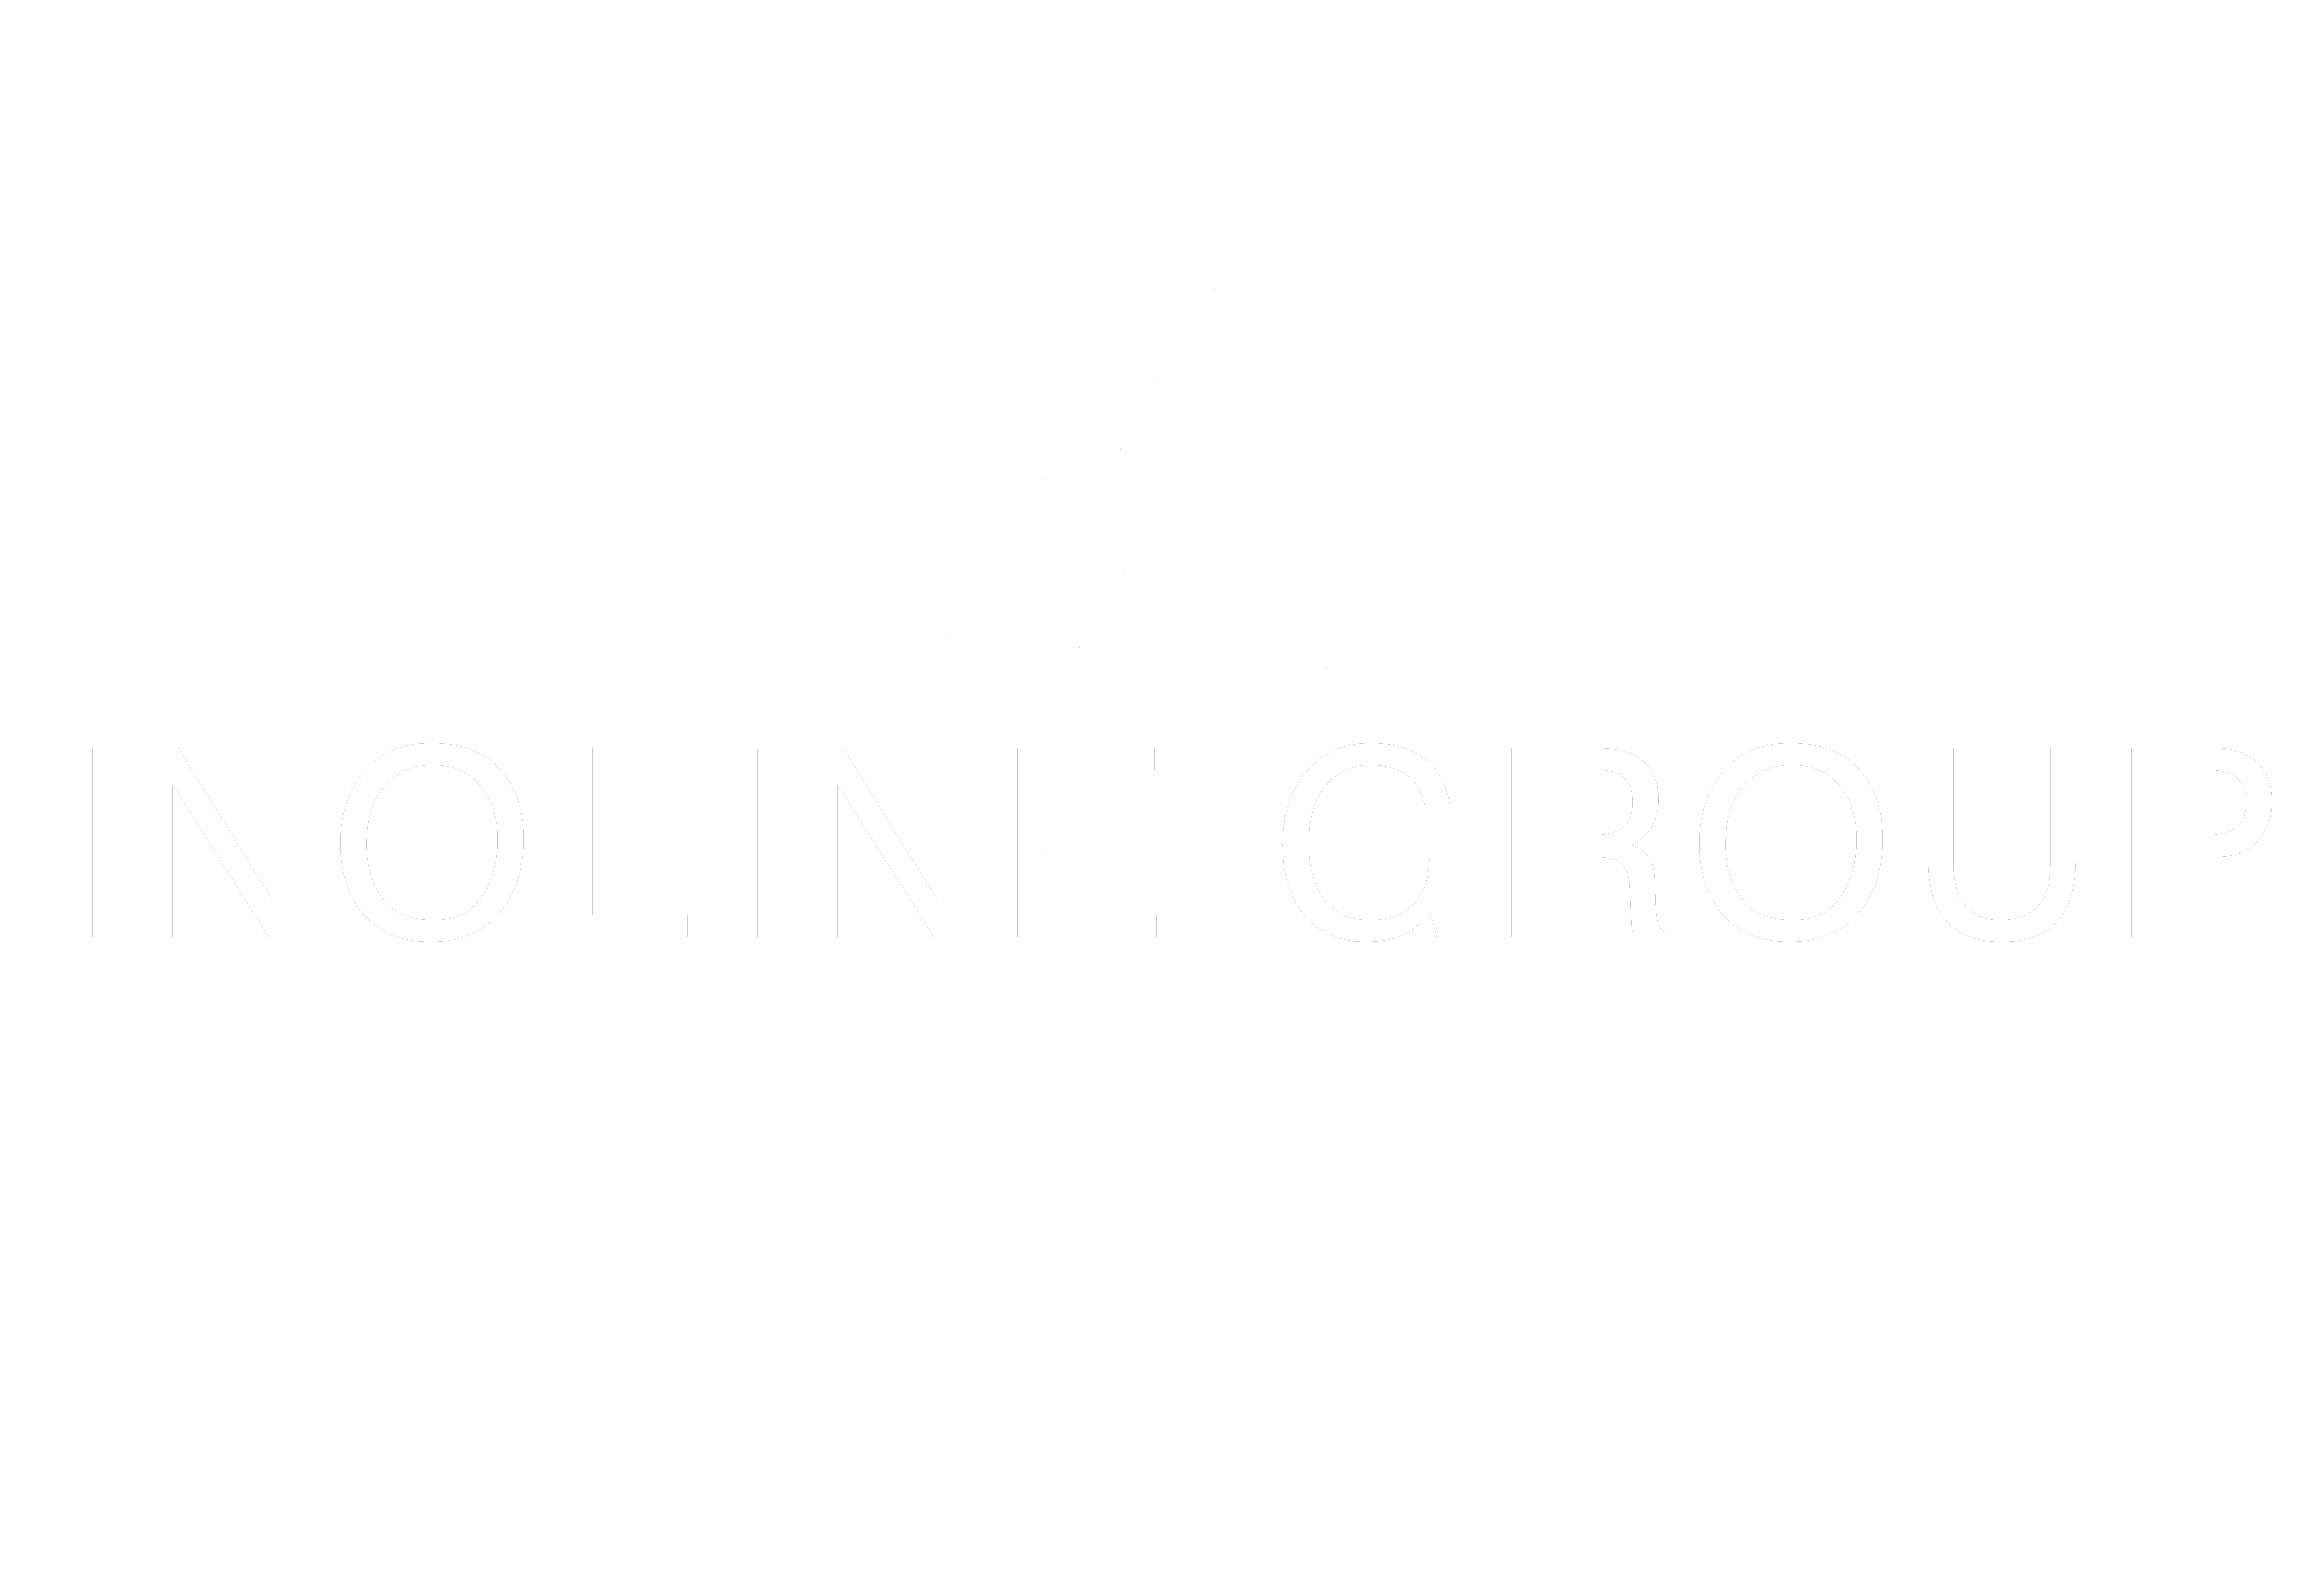 Inoline Group